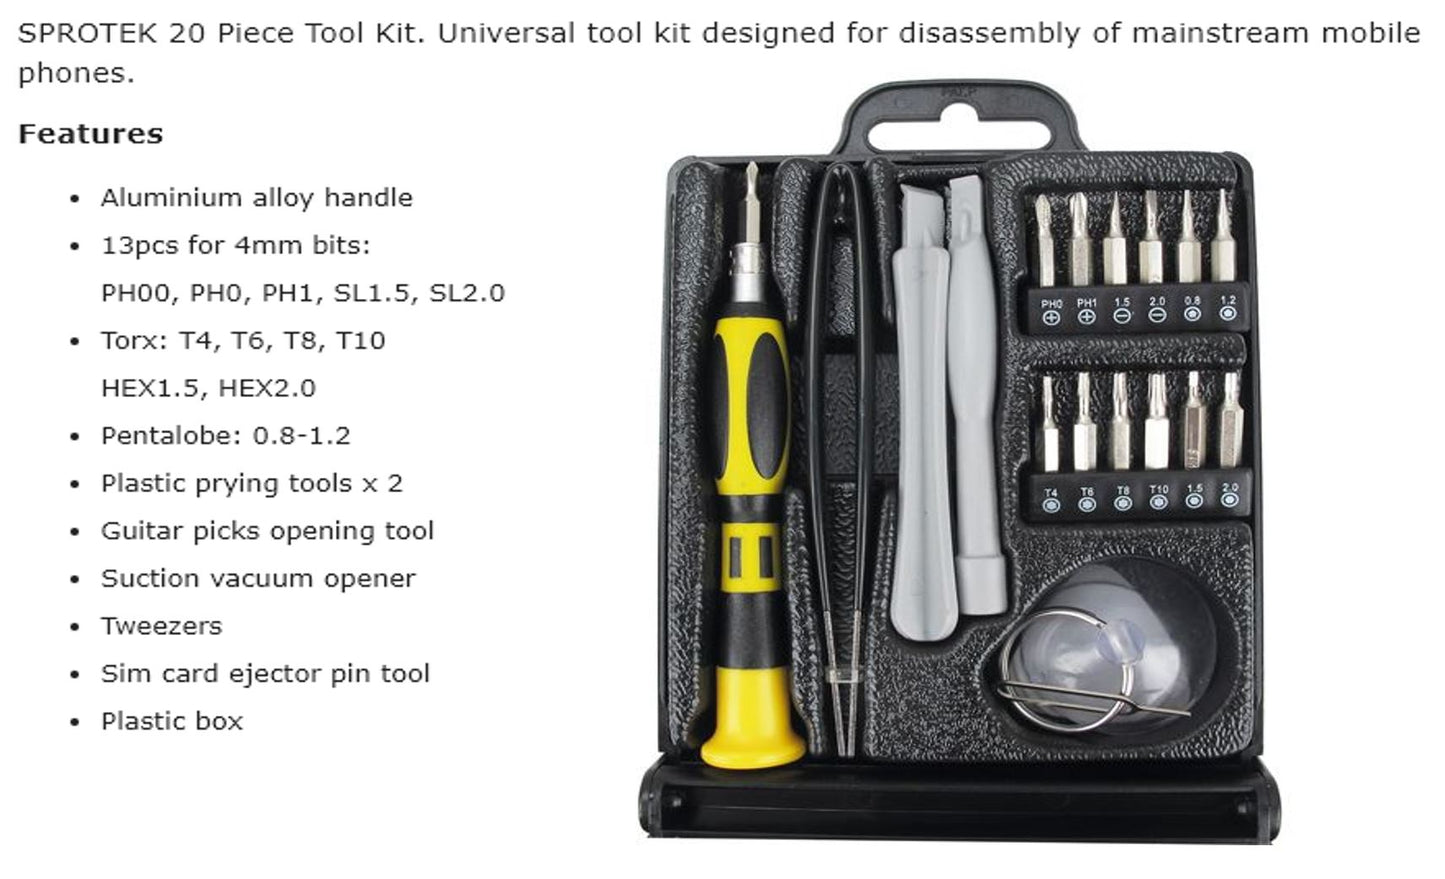 SPROTEK 20 Piece Tool Kit. Universal Tool Kit Designed For